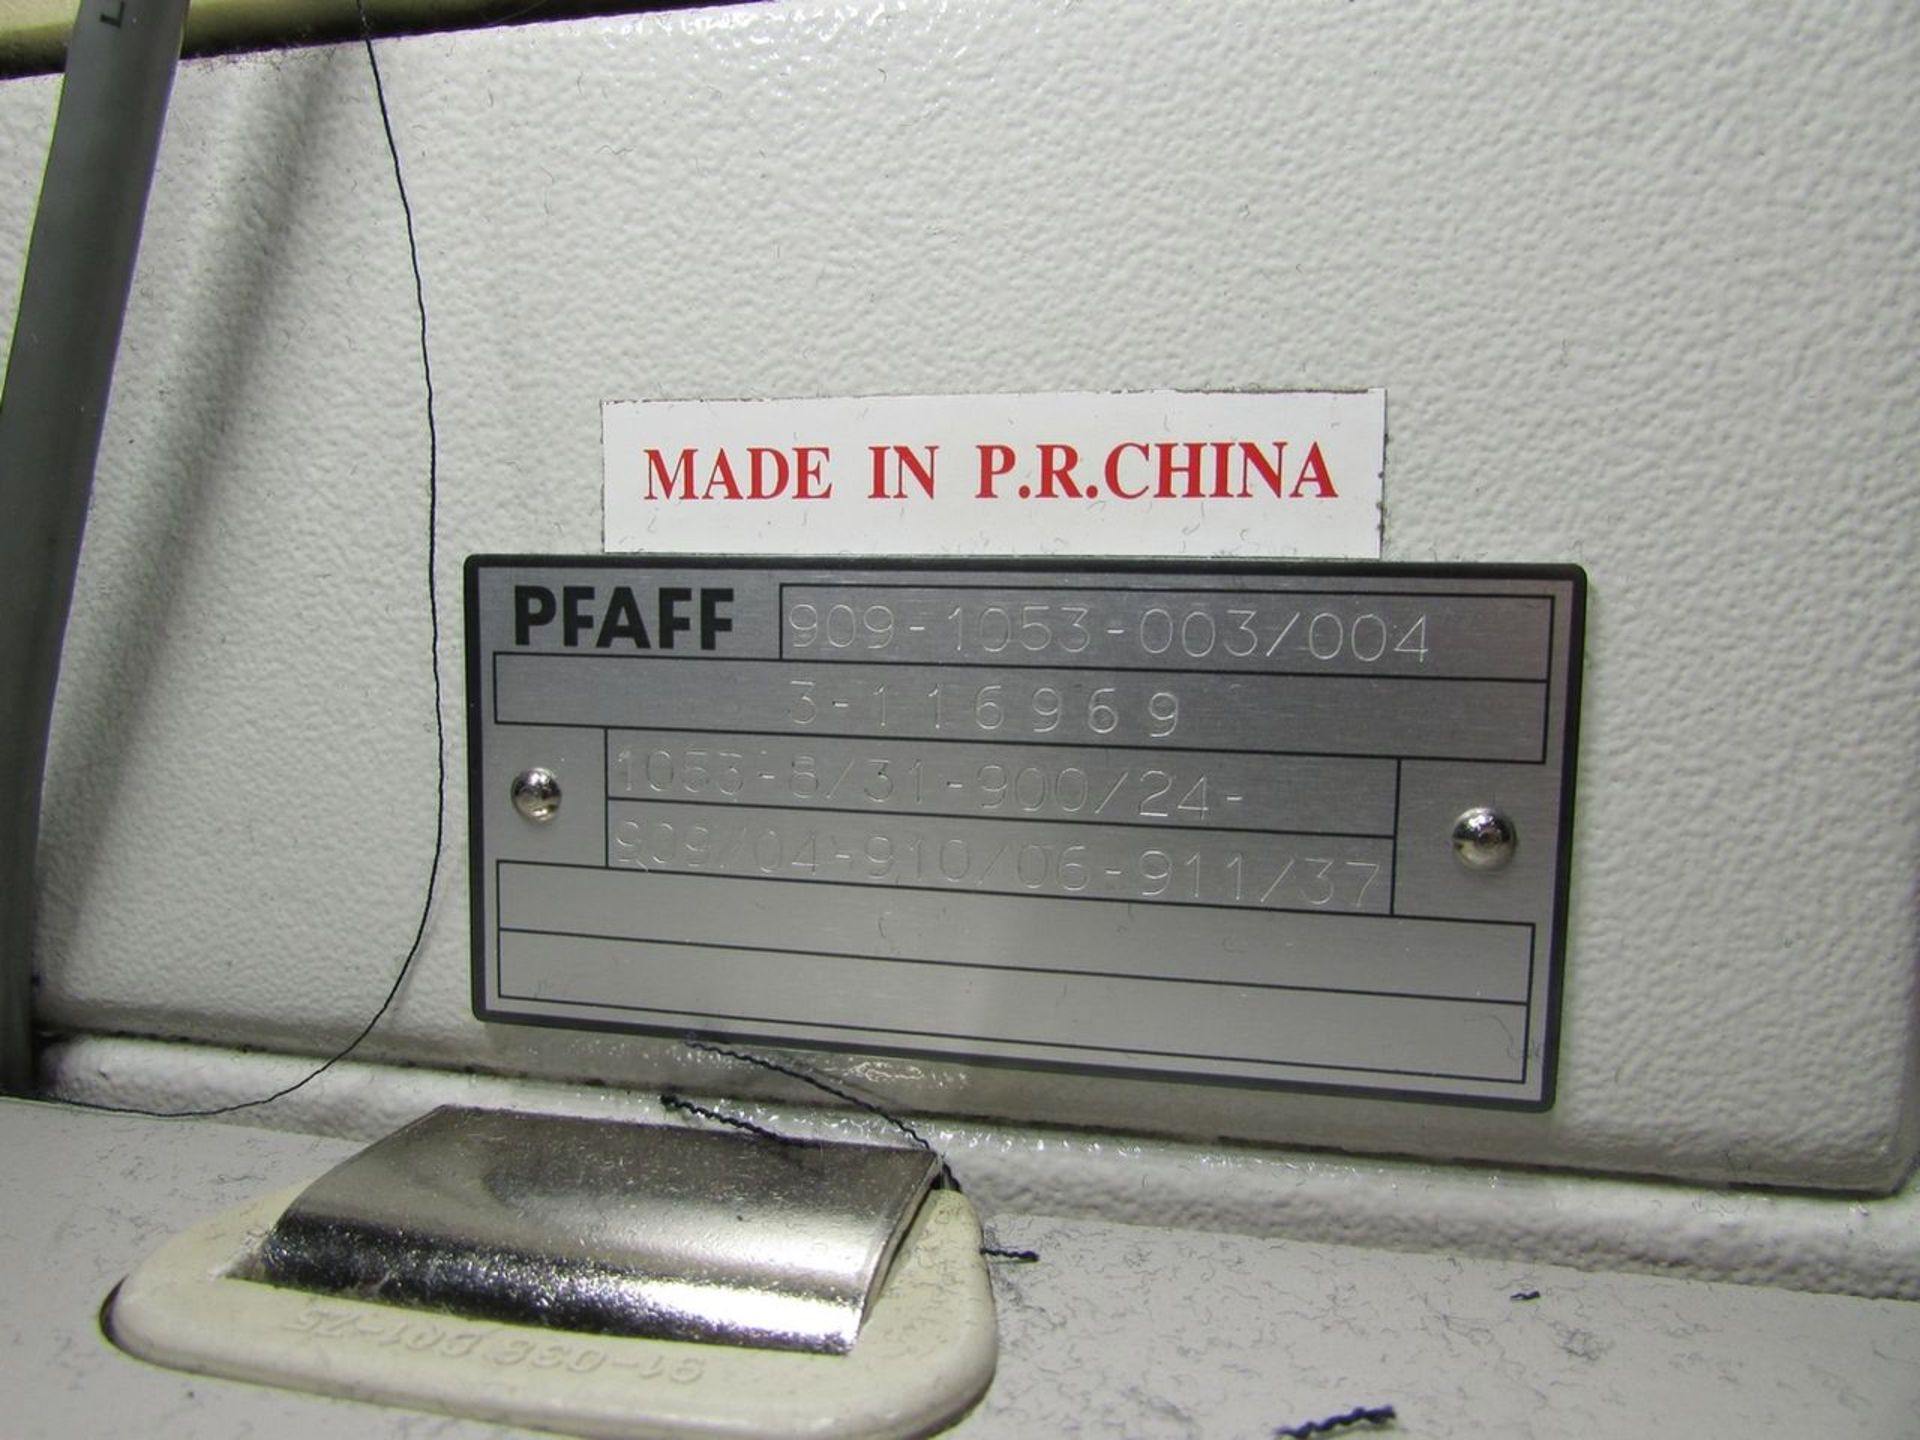 Pfaff Model 1053-8/31-900/24 (S/N: 3-116969) Single Needle Lockstitch Sewing Machine, Trimmer, - Image 10 of 10